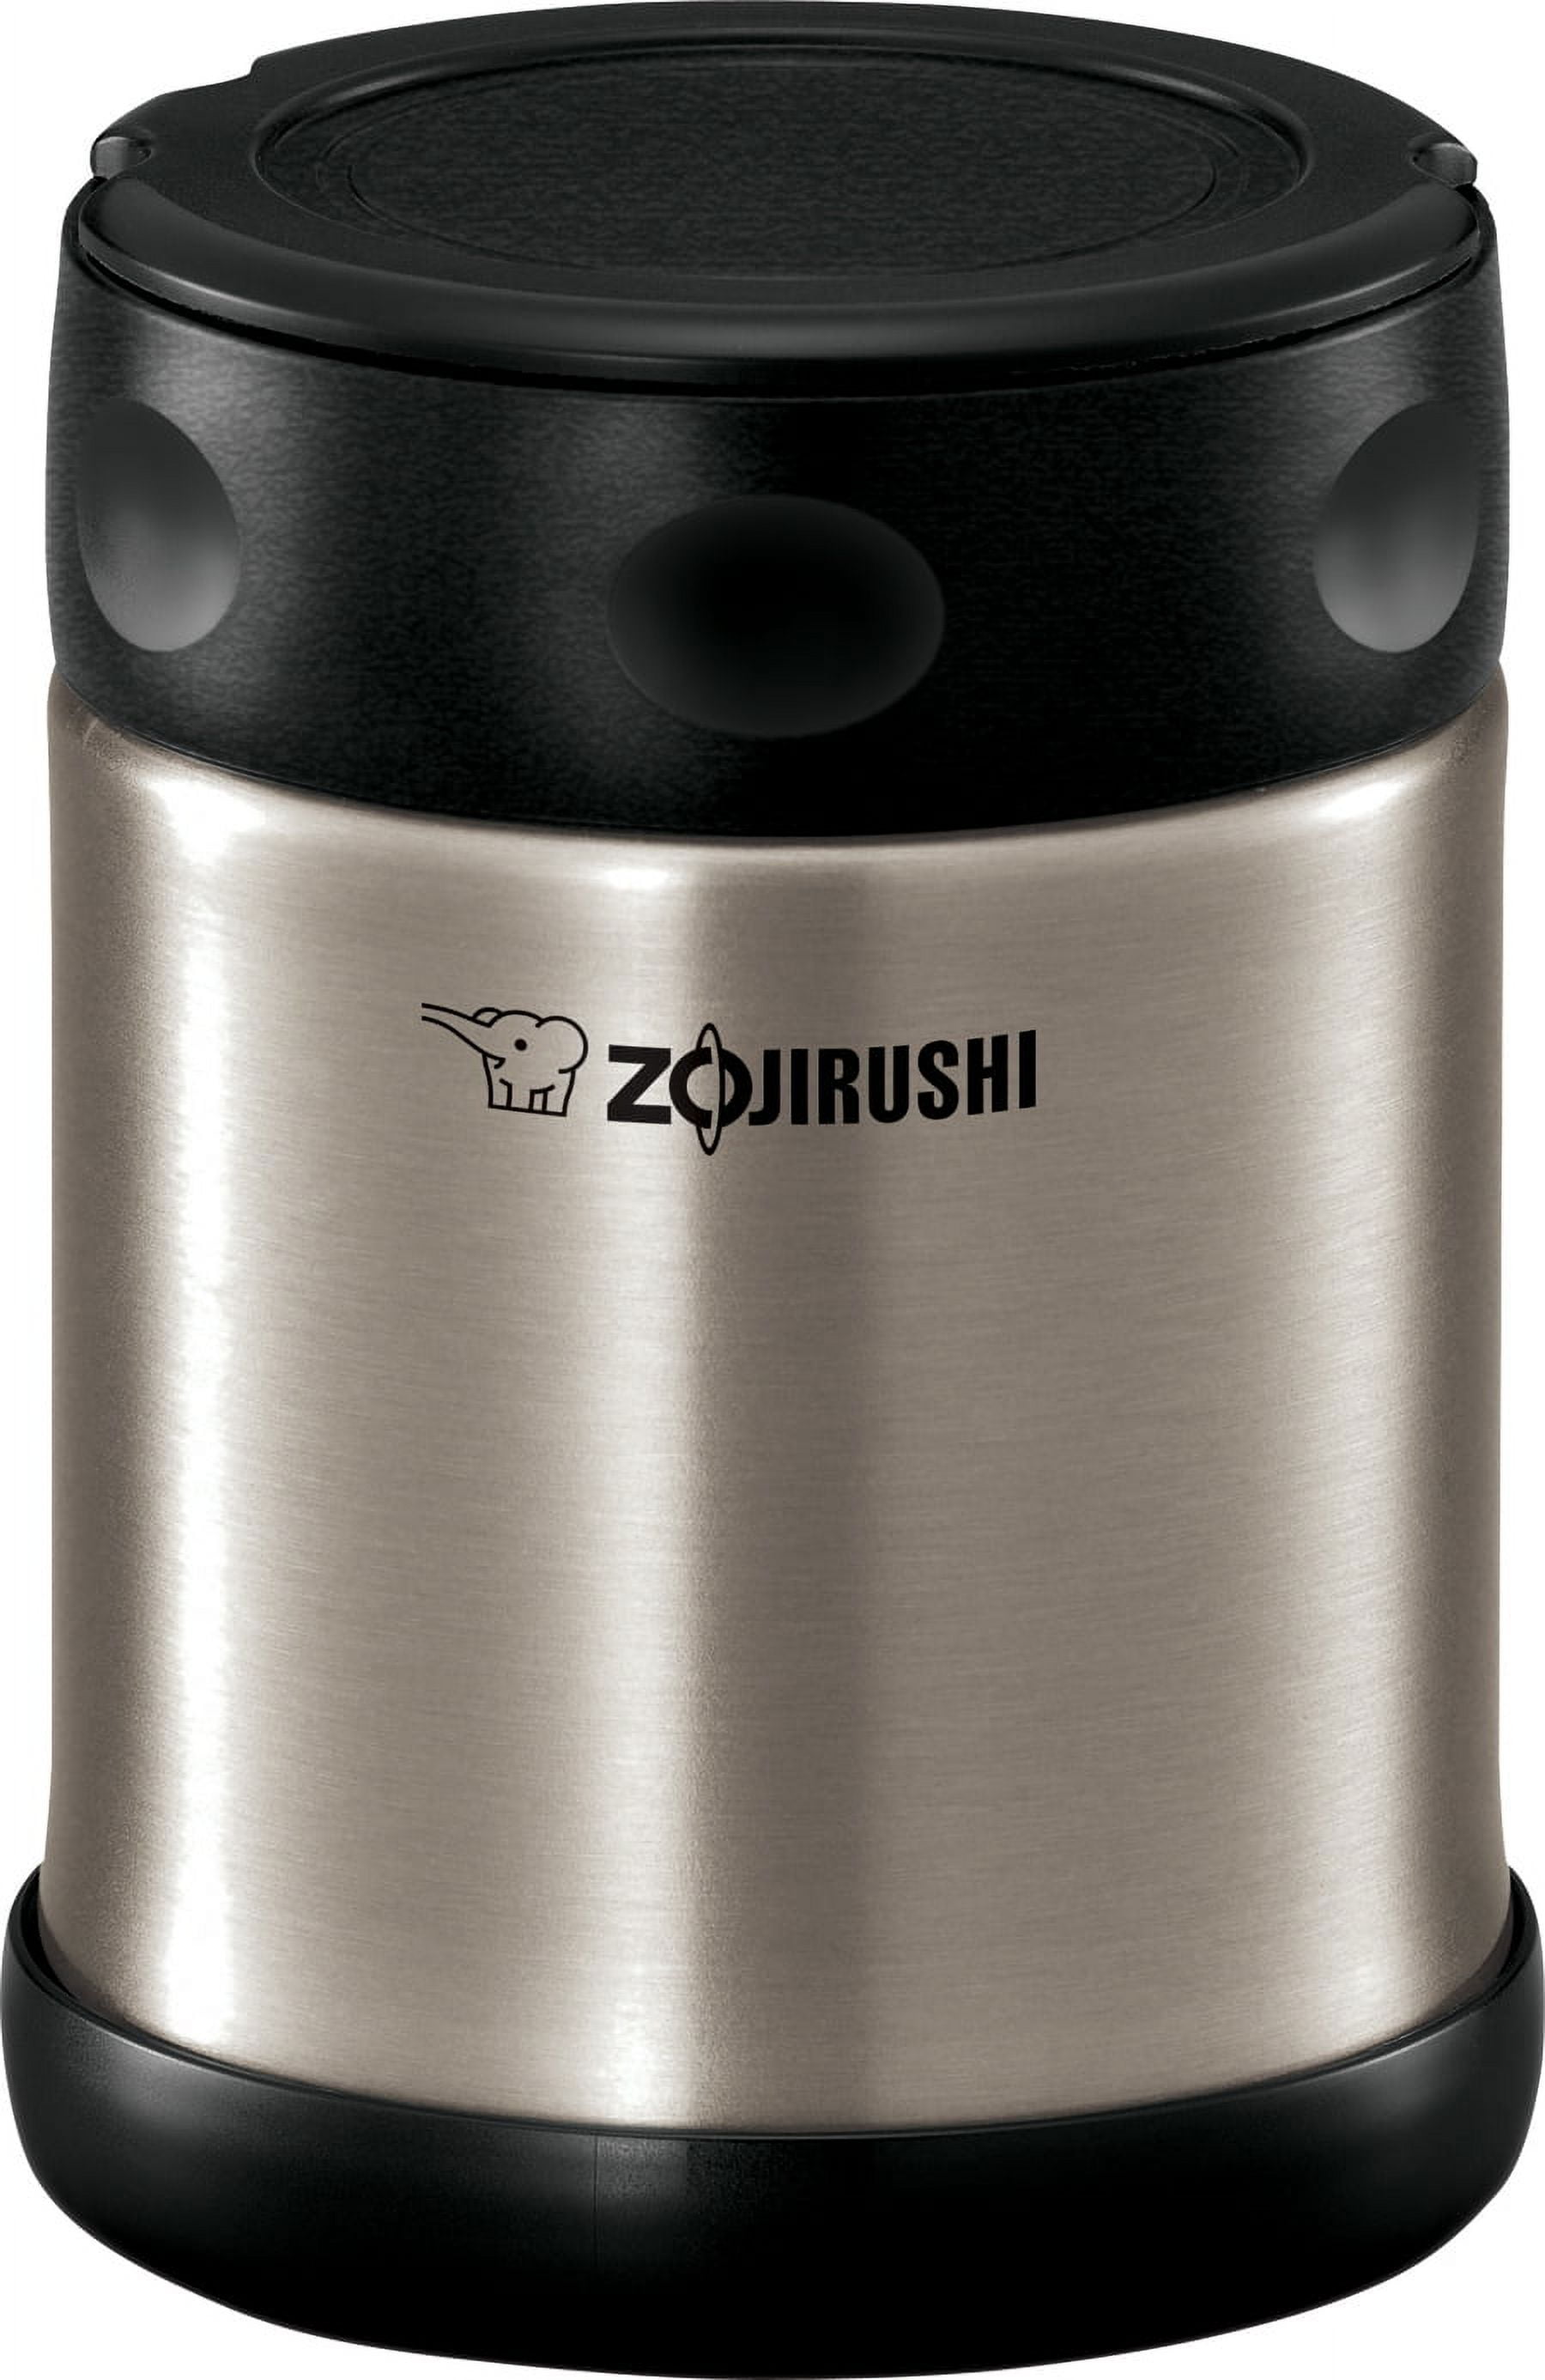 Zojirushi Stainless Steel Food Jar 18 oz - Bed Bath & Beyond - 37865521